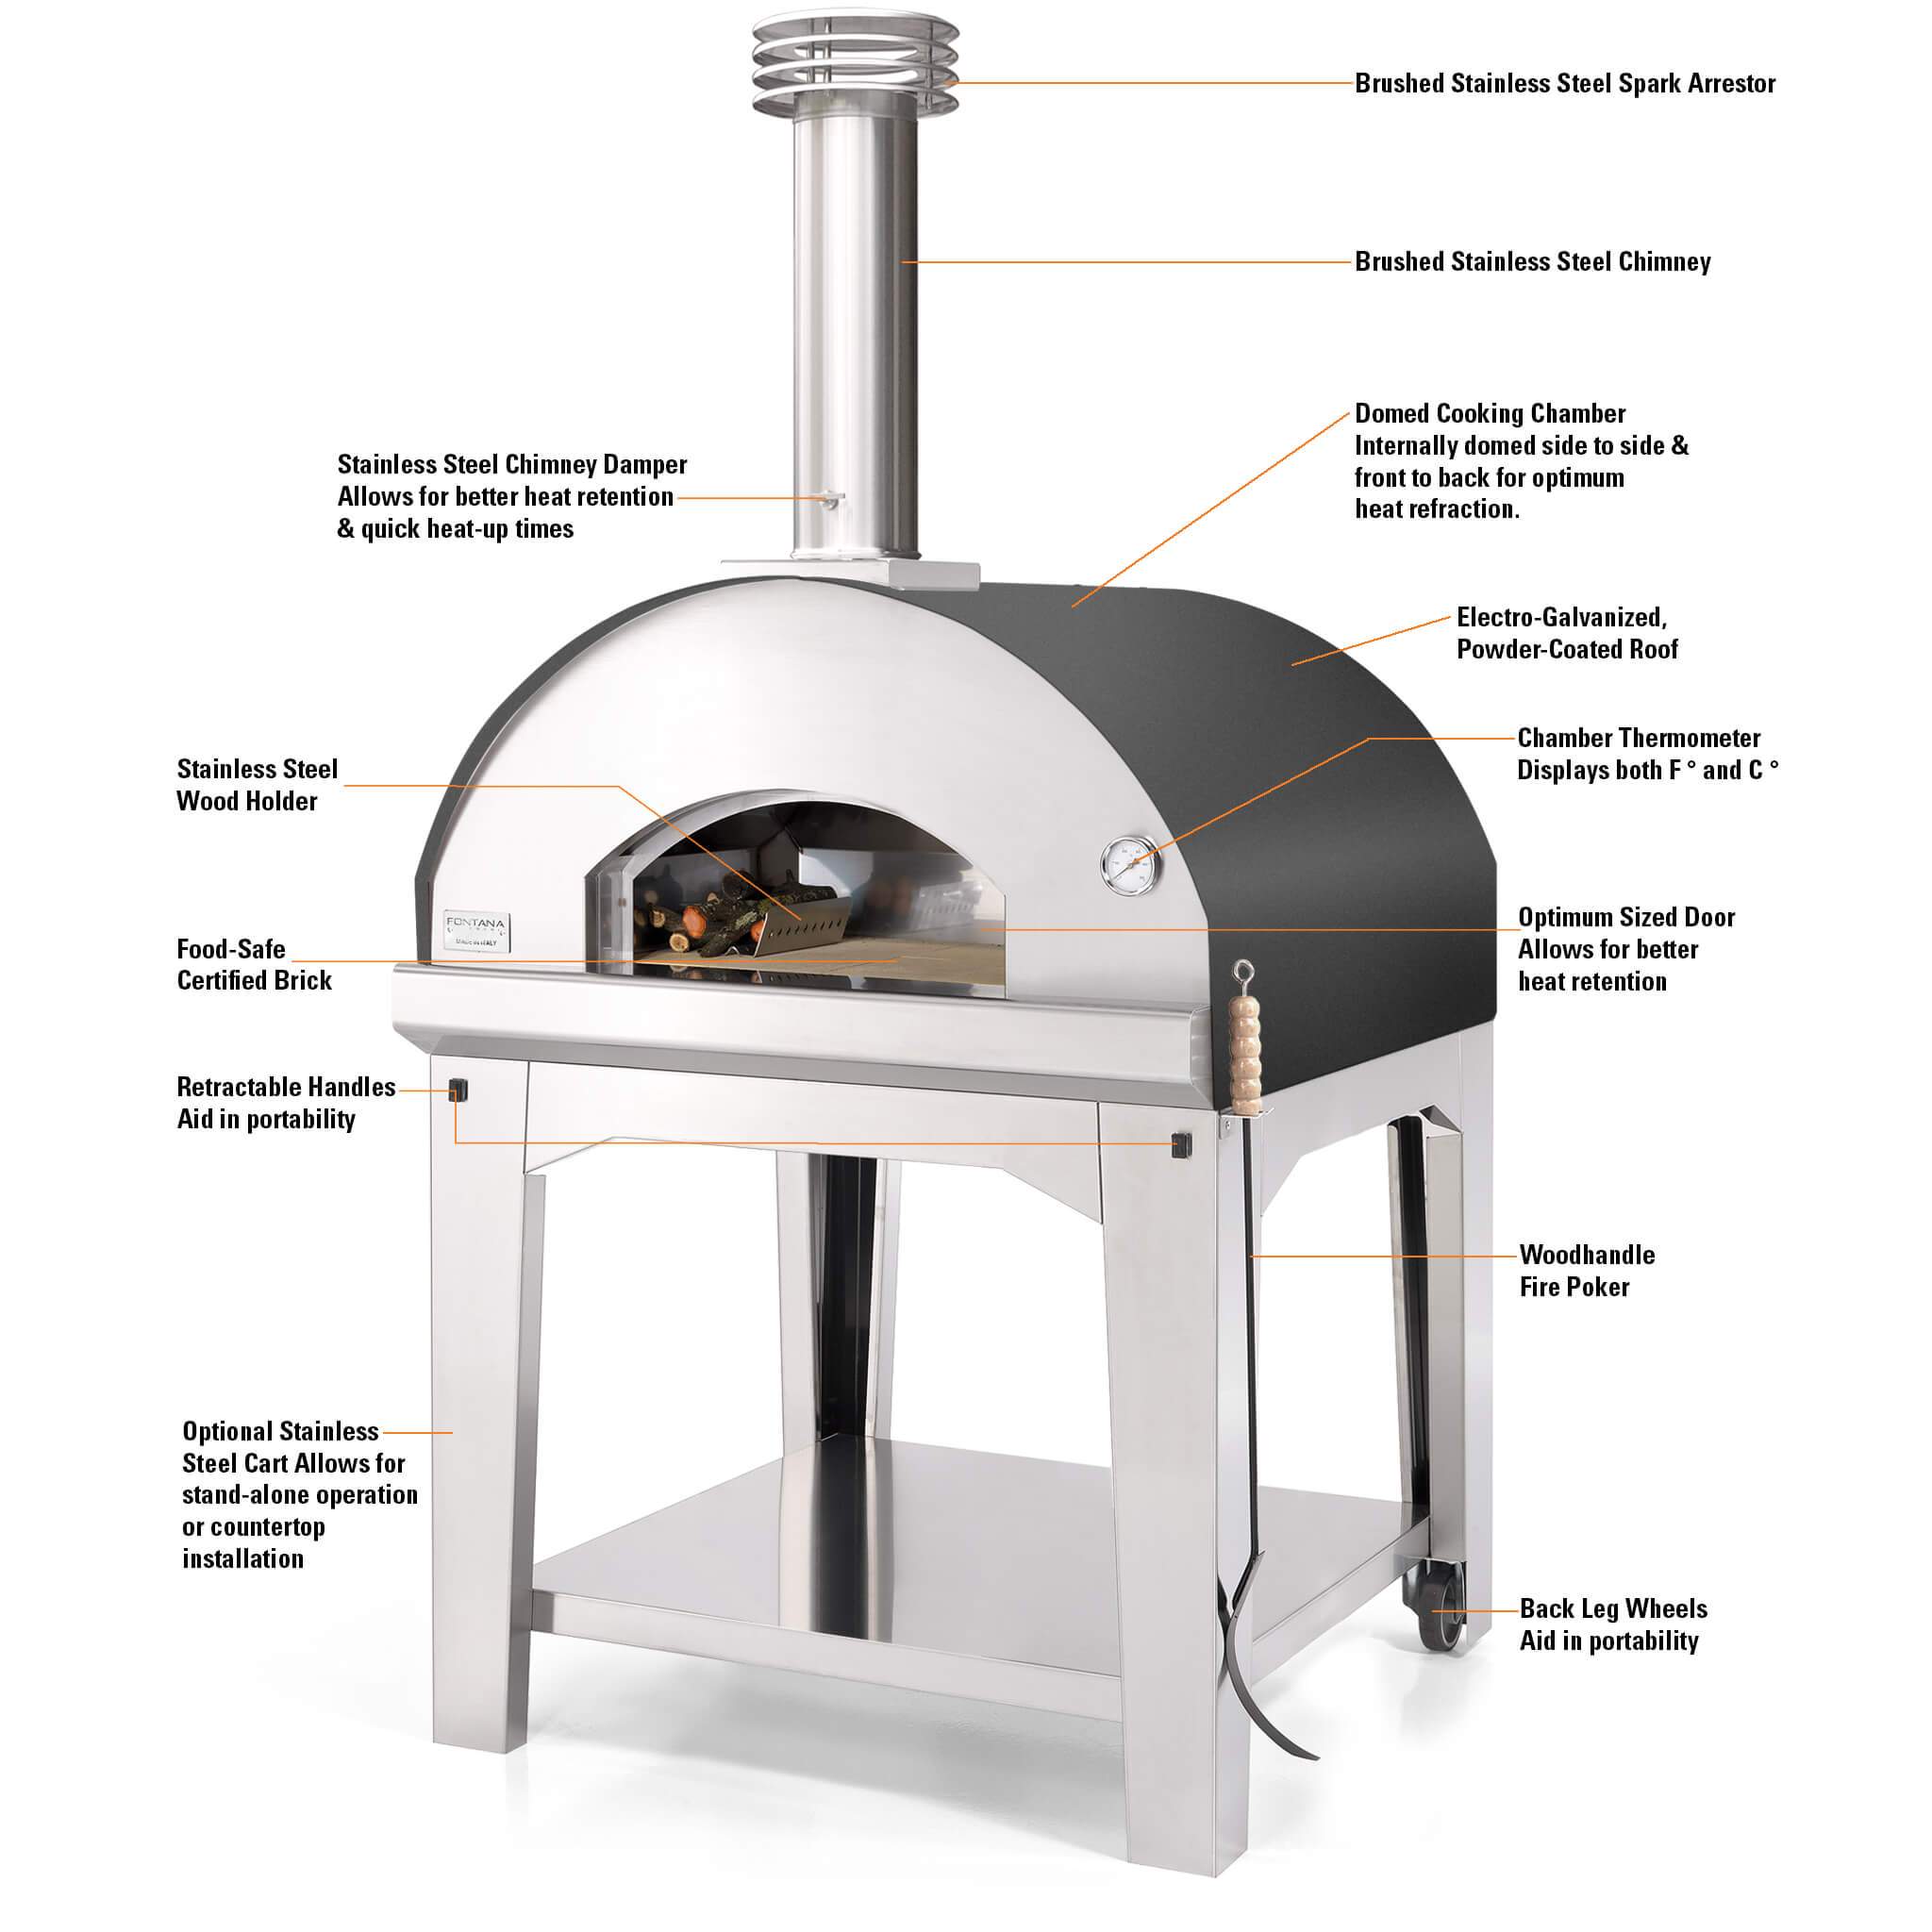 https://granitecountertopsoregon.com/wp-content/uploads/2020/02/Marinara-Woodfired-Pizza-Oven-Features.jpg